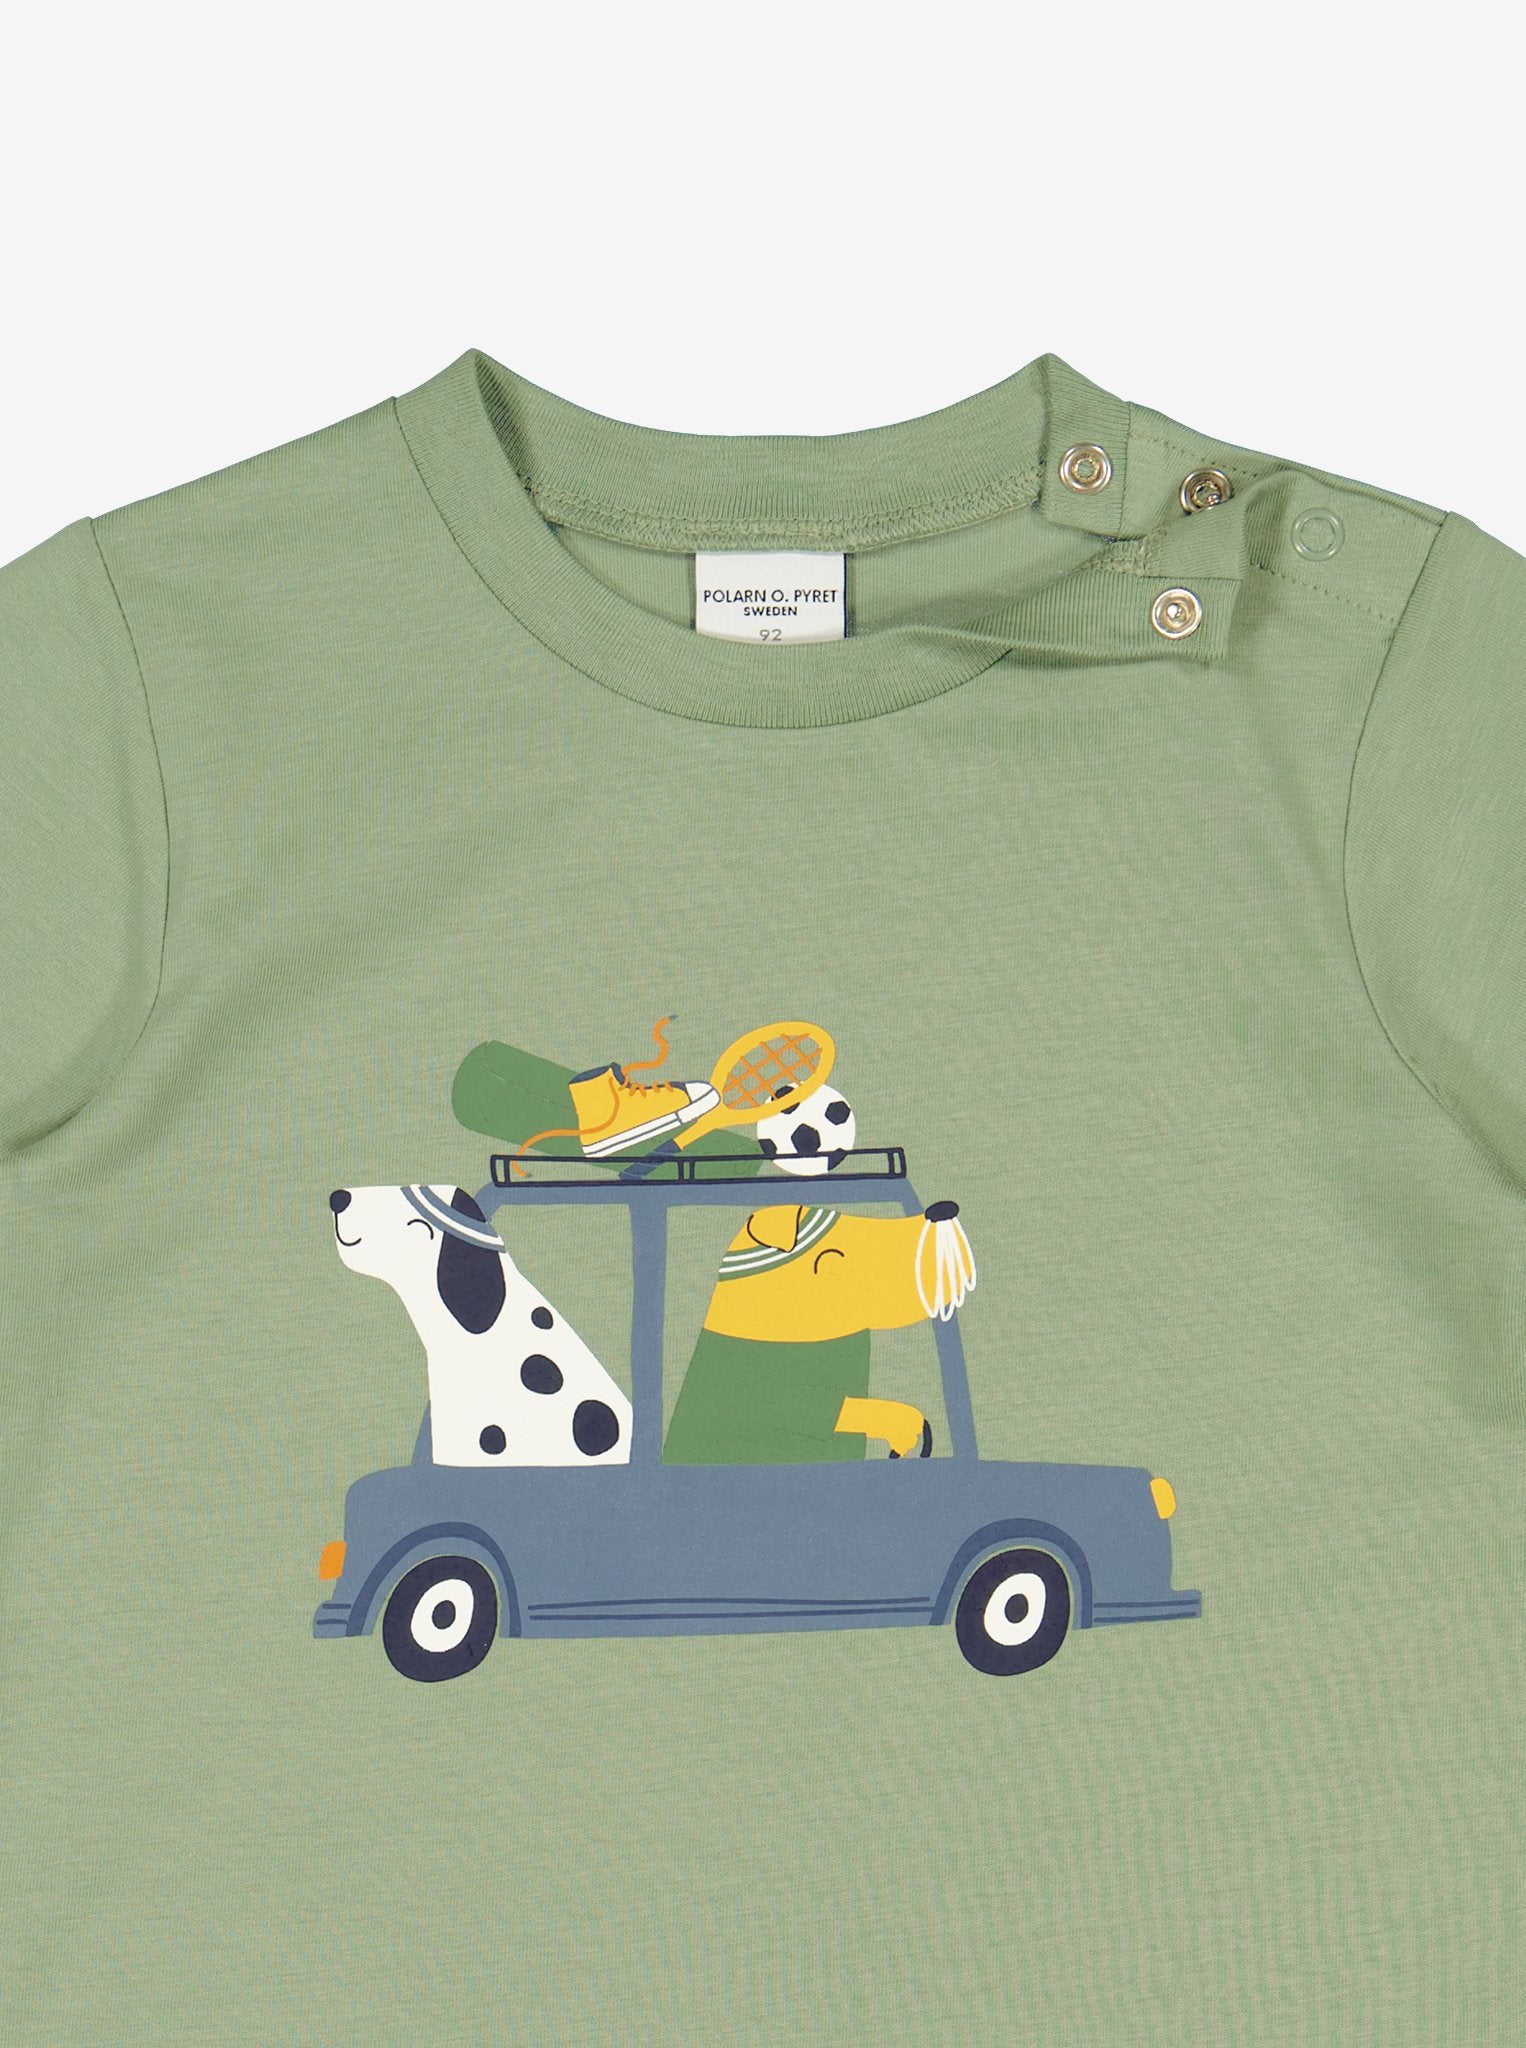  Organic Green Animal Print Kids T-Shirt from Polarn O. Pyret Kidswear. Made with 100% organic cotton.